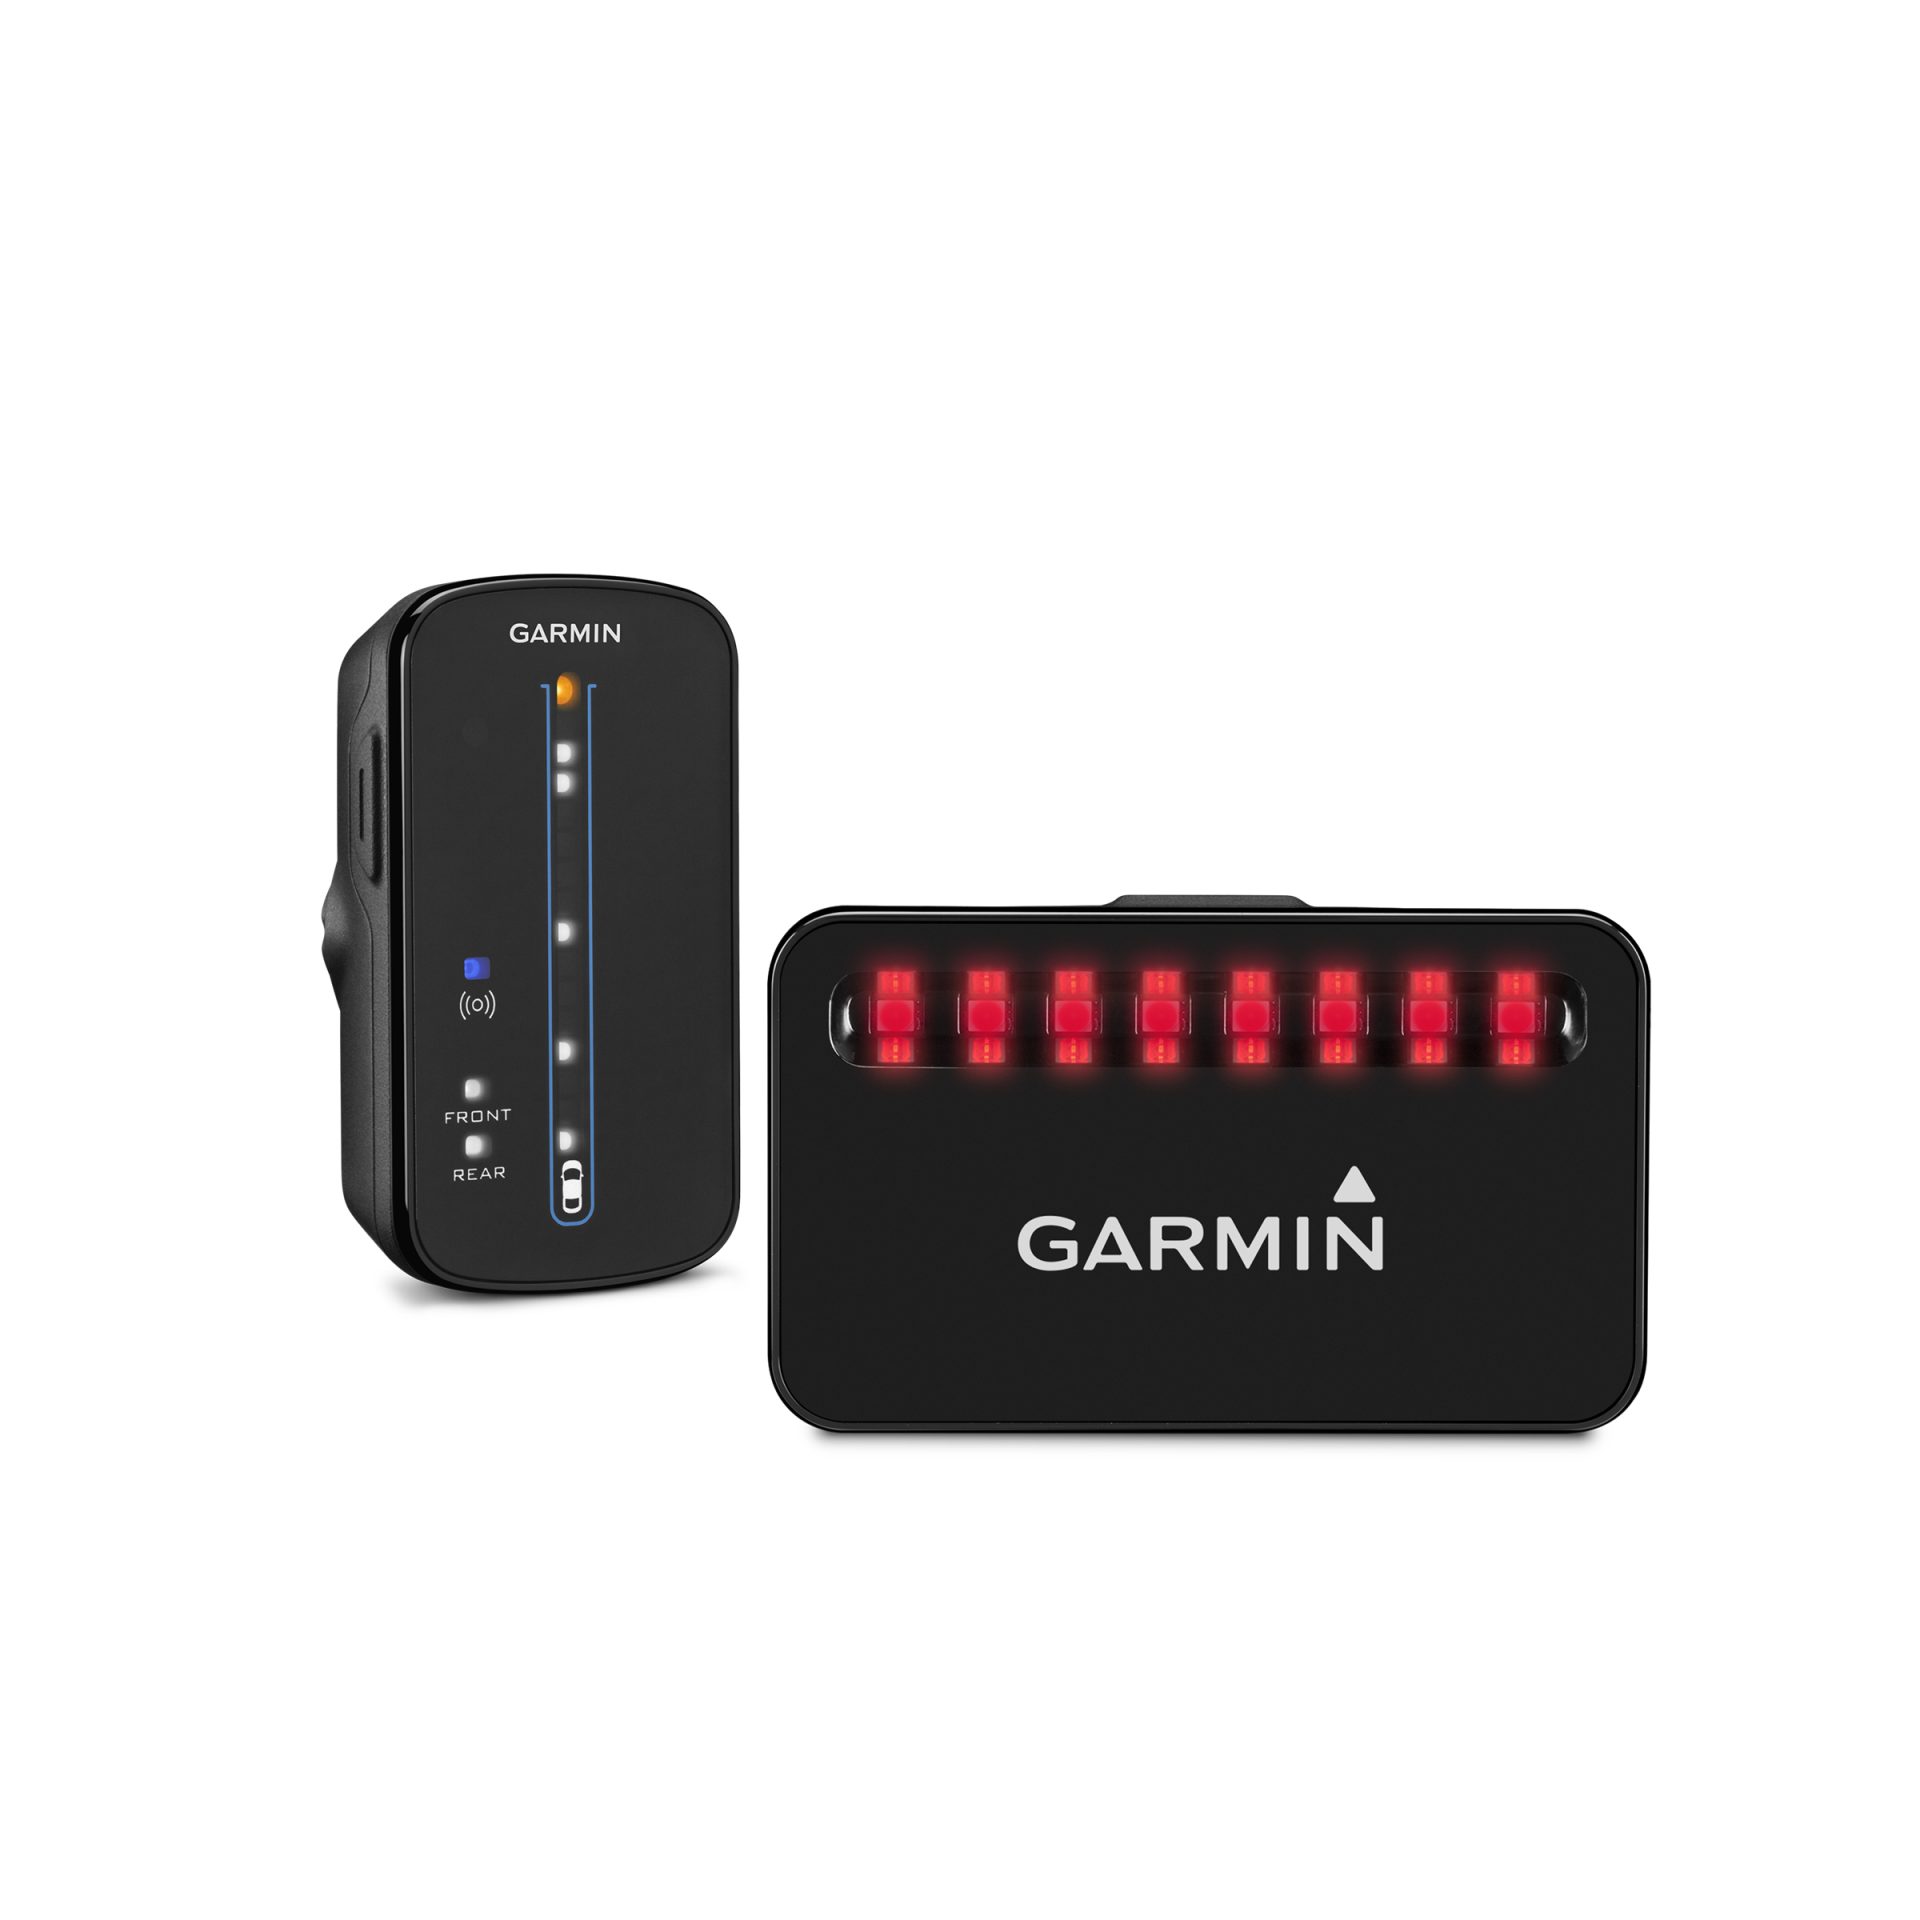 Garmin apresenta o novo radar para bicicletas